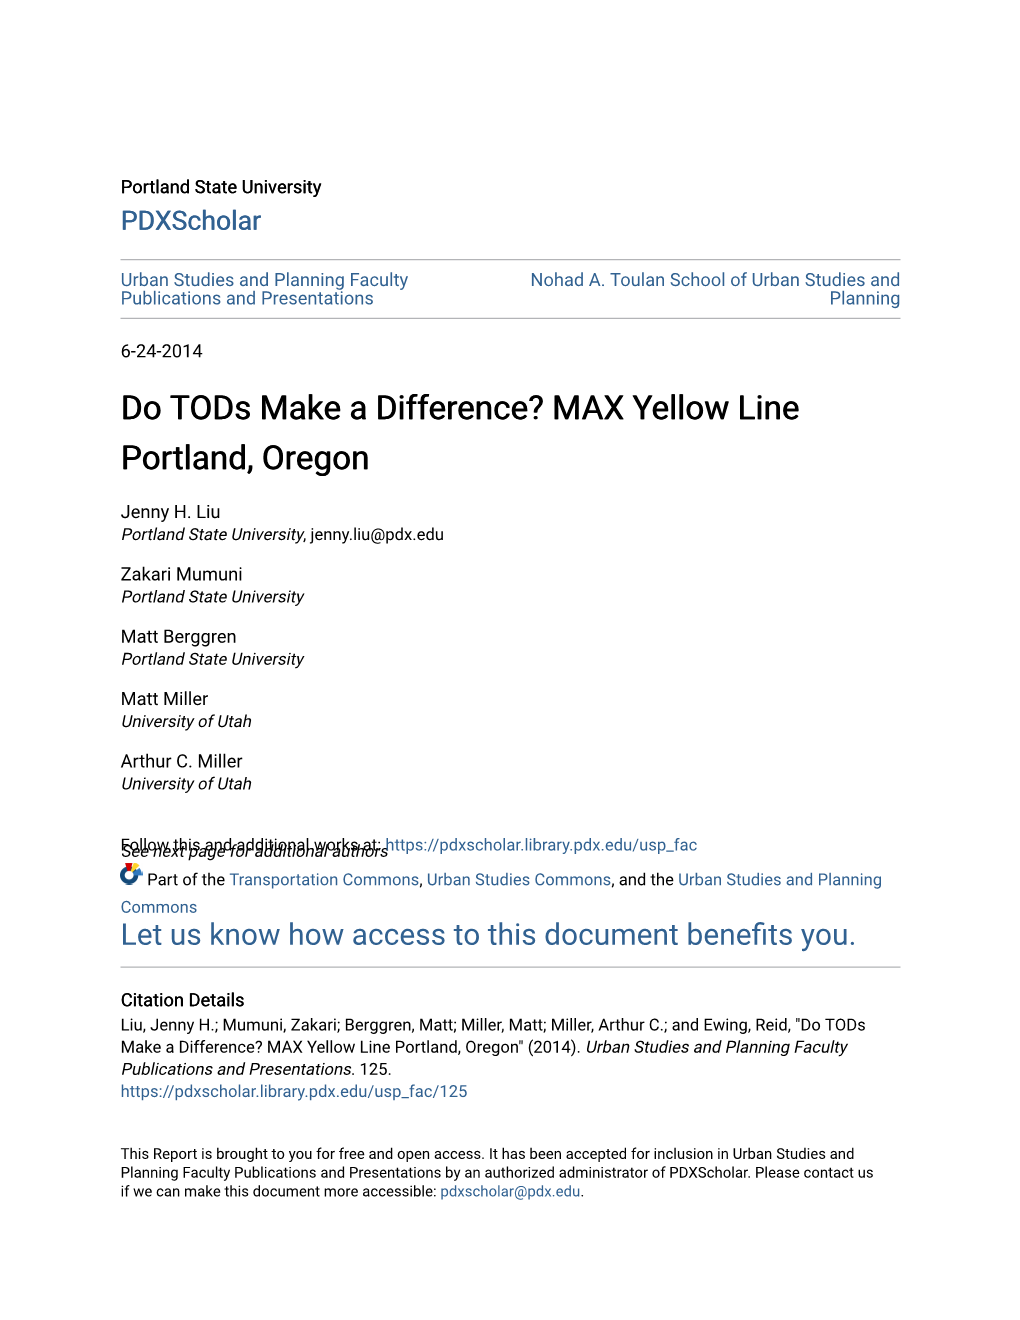 MAX Yellow Line Portland, Oregon